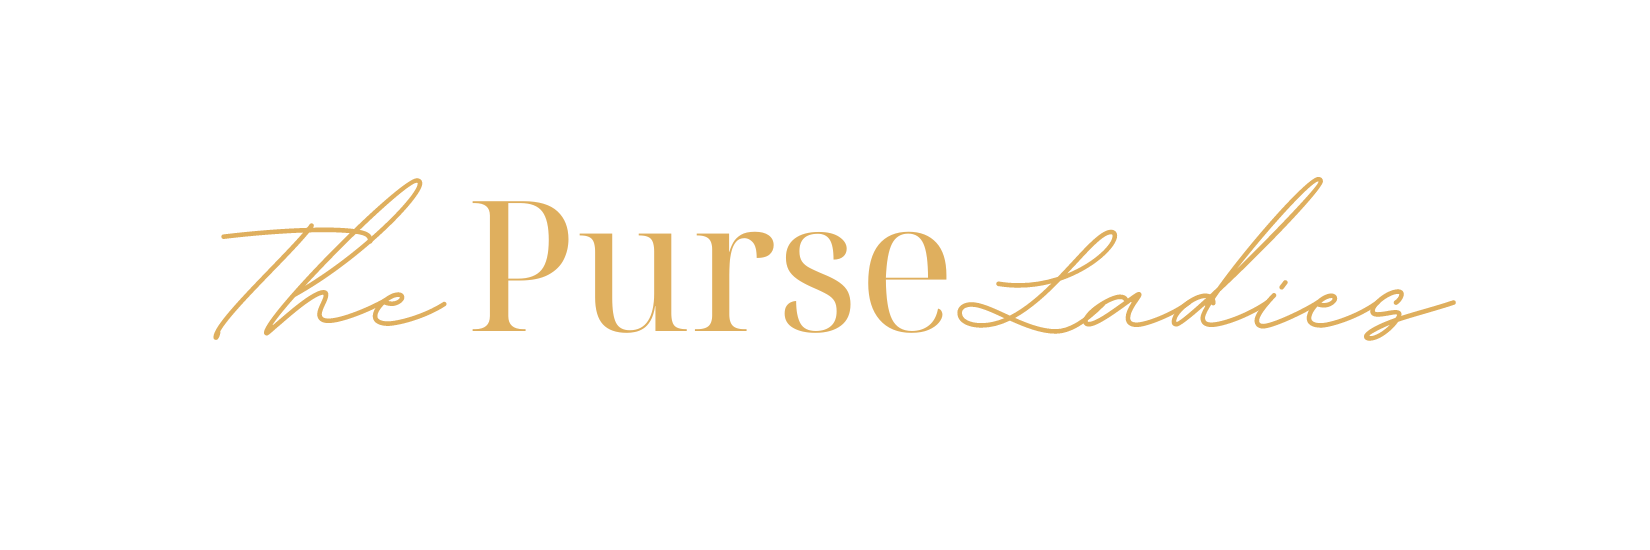 10 Best Ladies Purse Flipkart Products - February 202